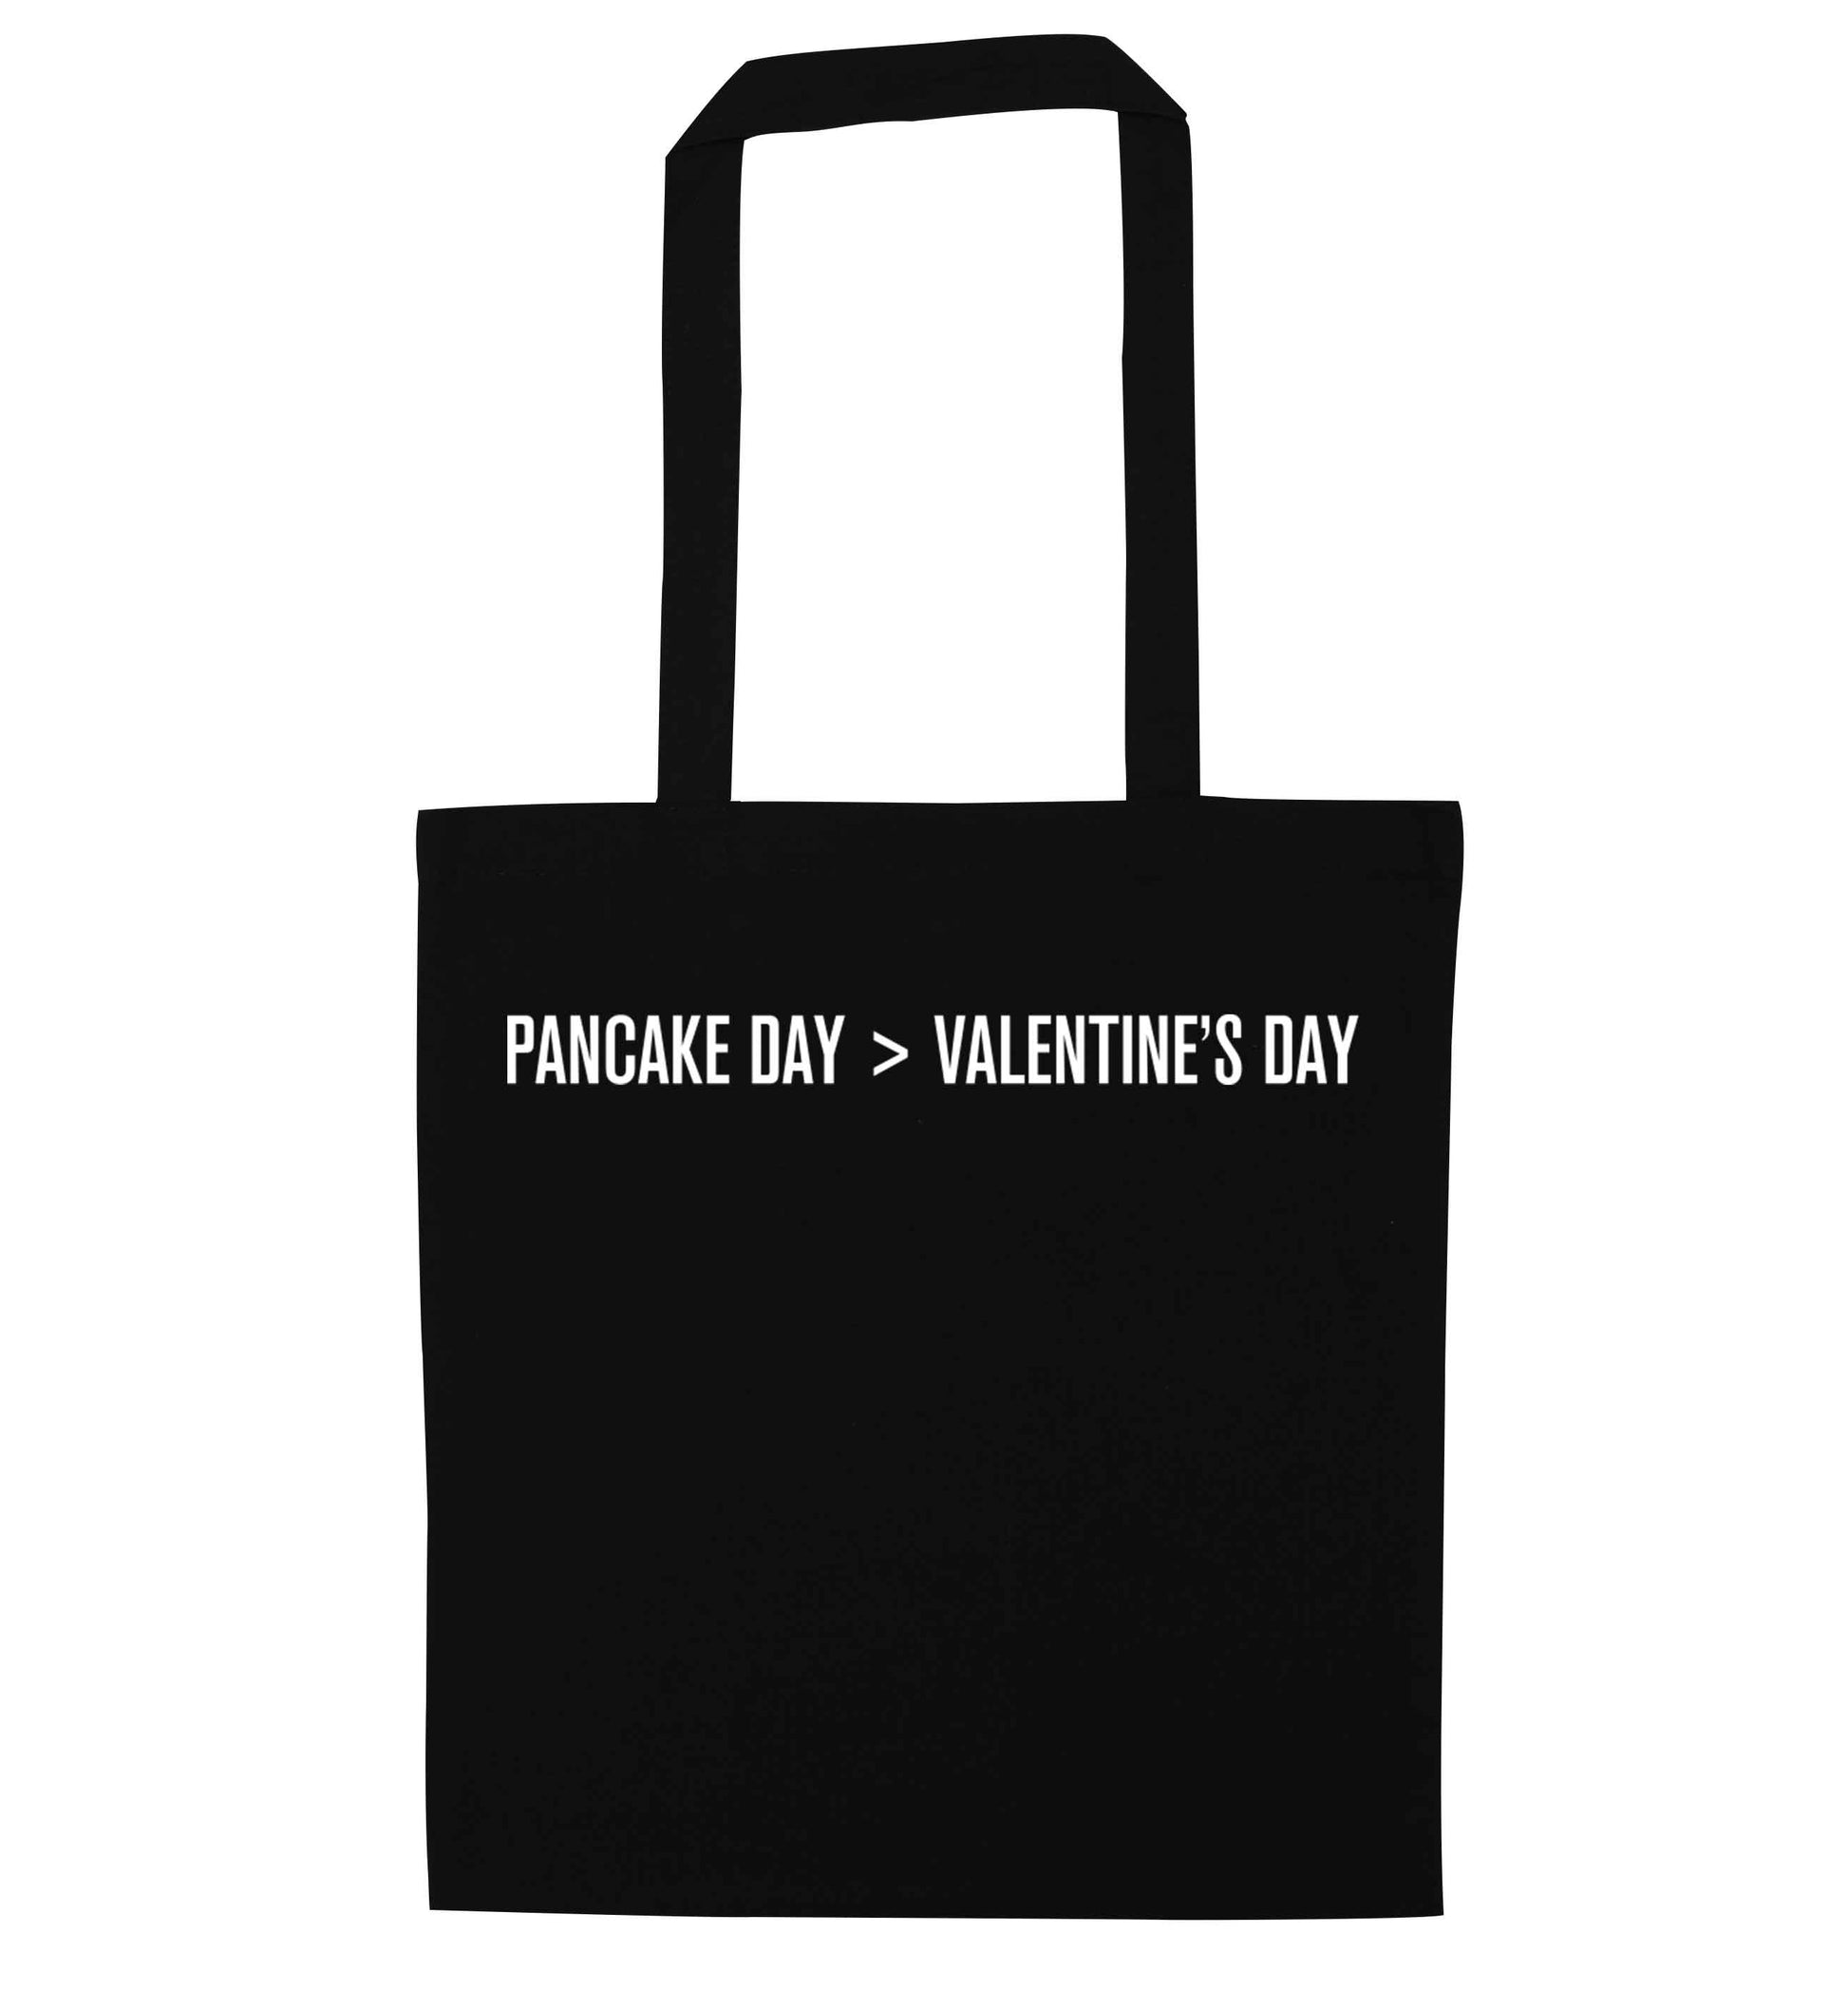 Pancake day > valentines day black tote bag